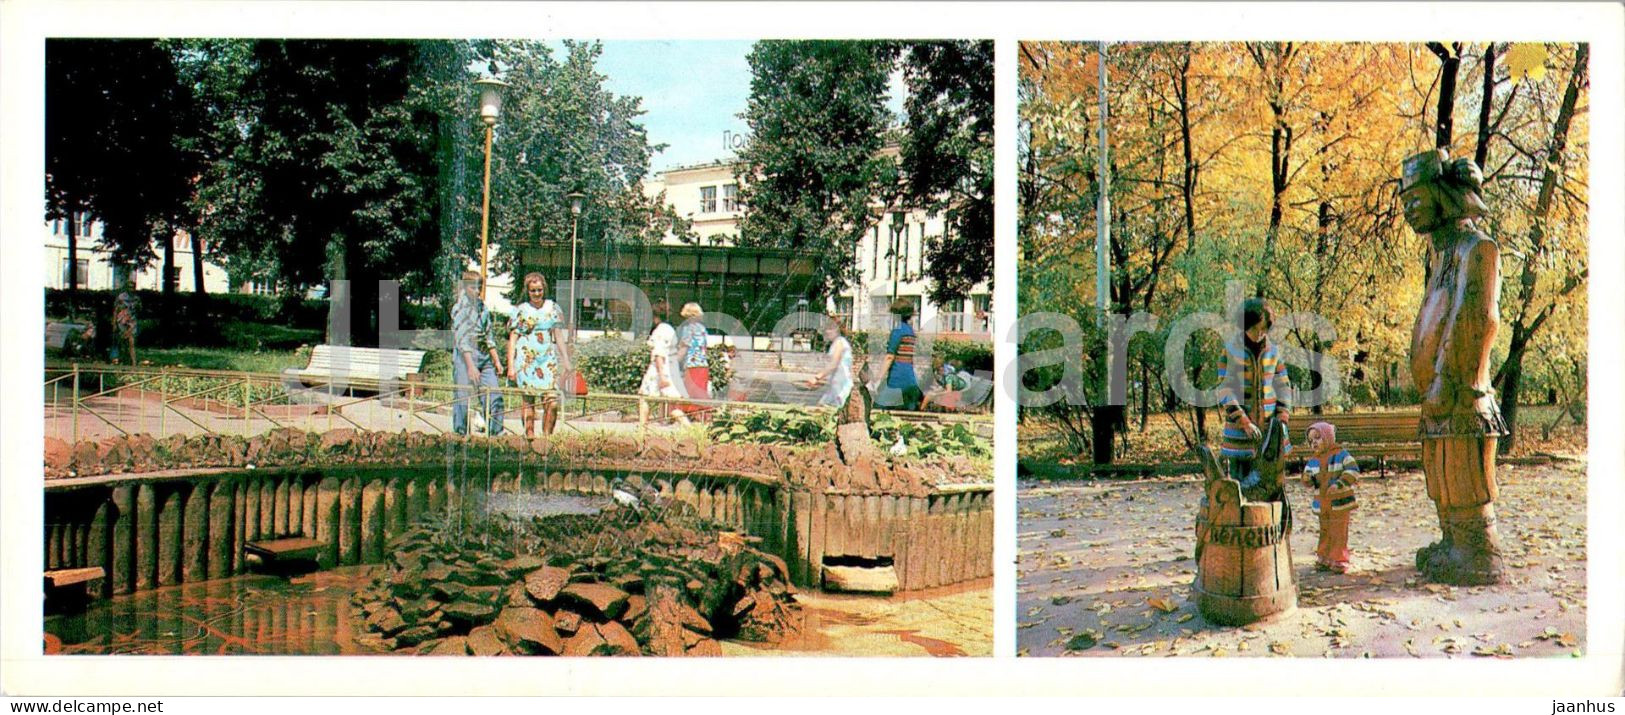 Bryansk - Marx Square - Tolstoy Park Museum - 1980 - Russia USSR - Unused - Russland